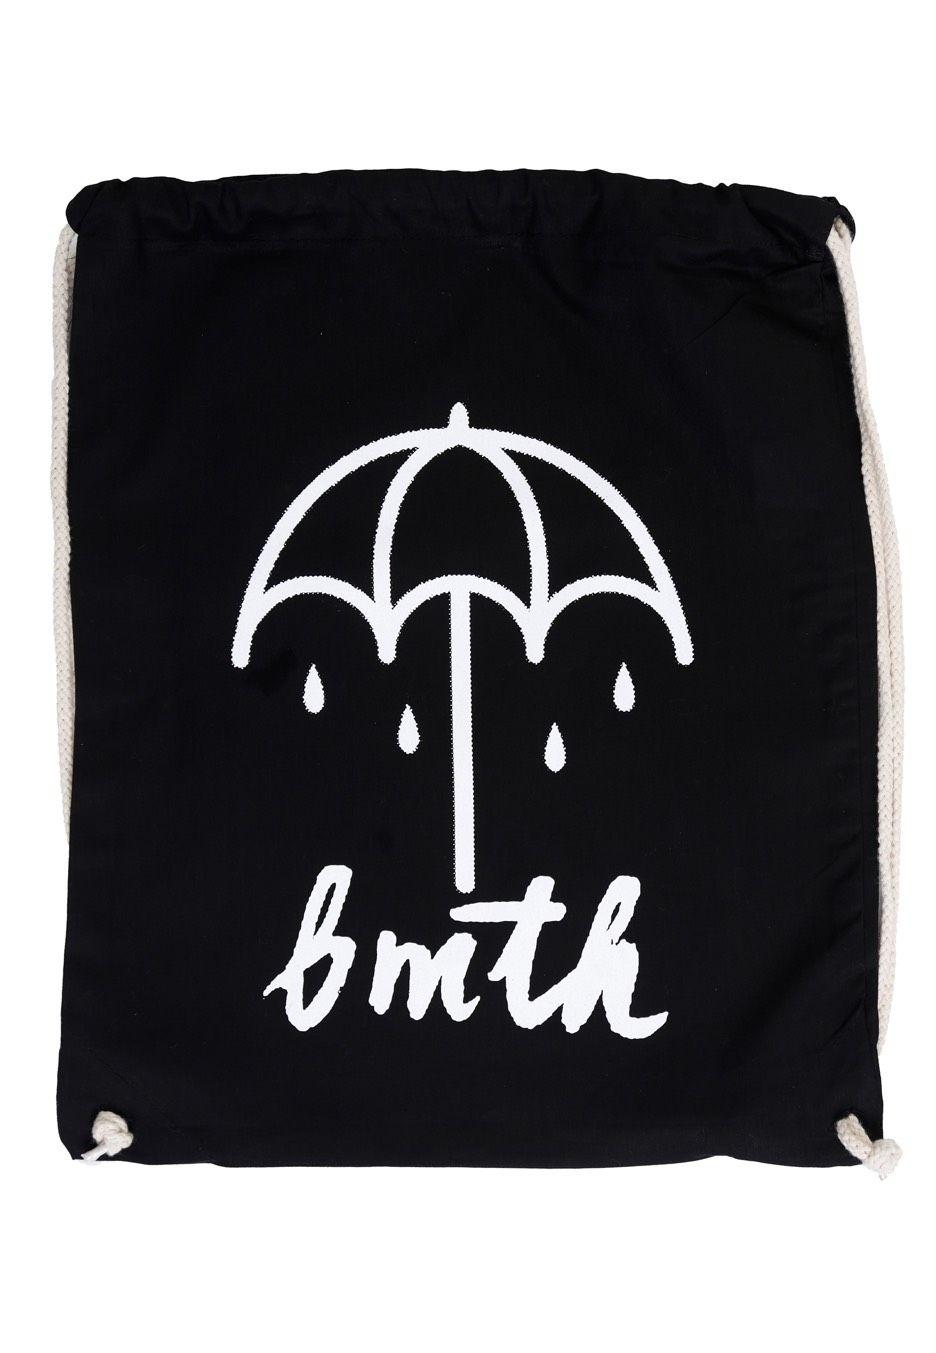 Bring Me the Horizon Umbrella Logo - Bring Me The Horizon - Umbrella Script Drawstring - Backpack ...